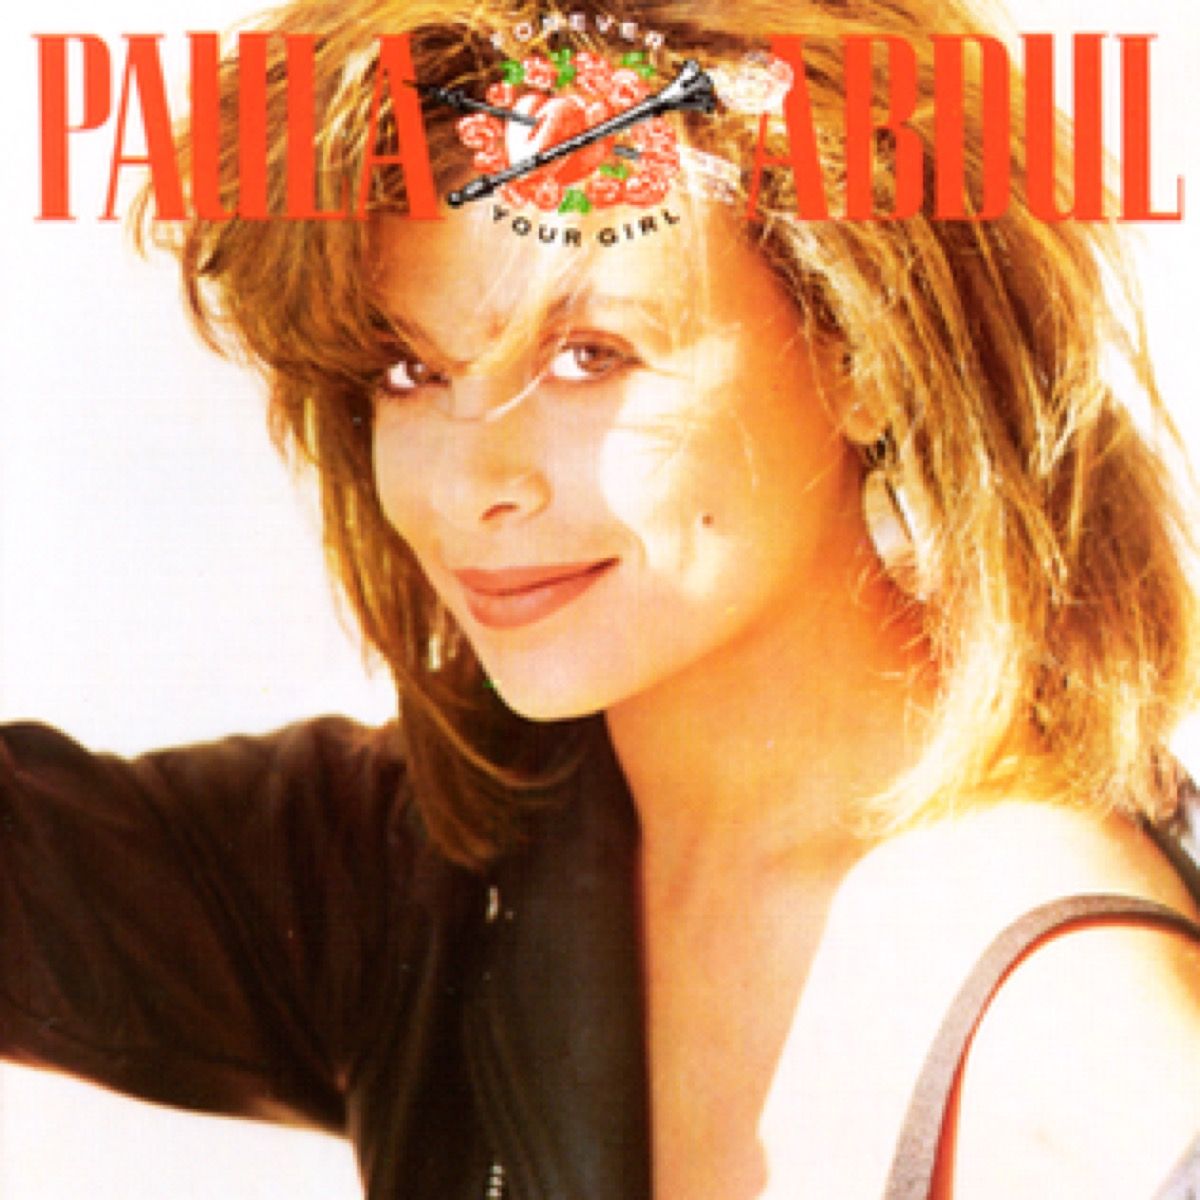 Paula Abdul dziesmas Forever Your Girl albuma noformējums